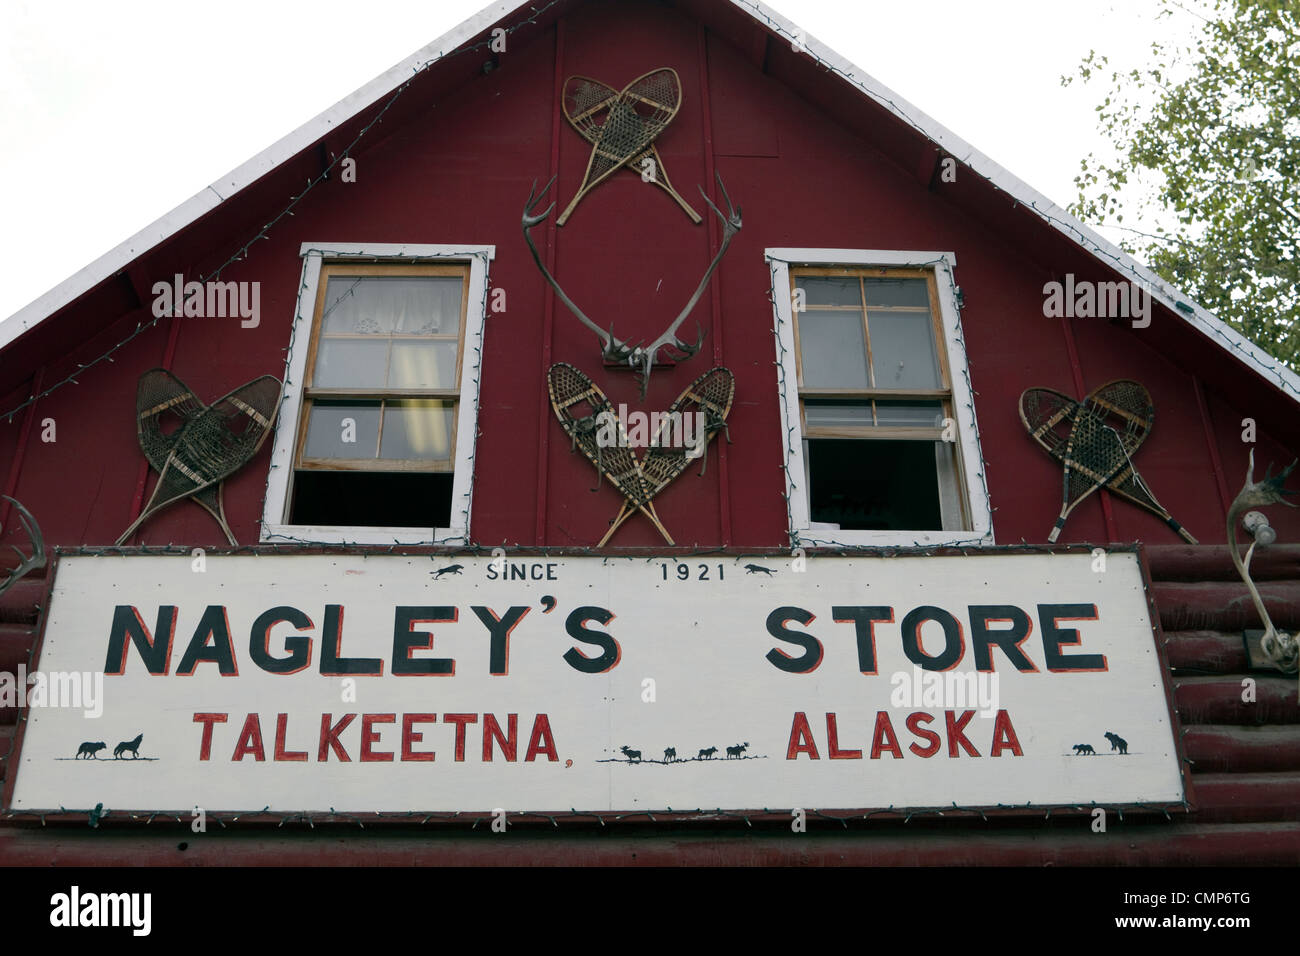 Nagley's Store sign, Talkeetna, Alaska, USA Stock Photo